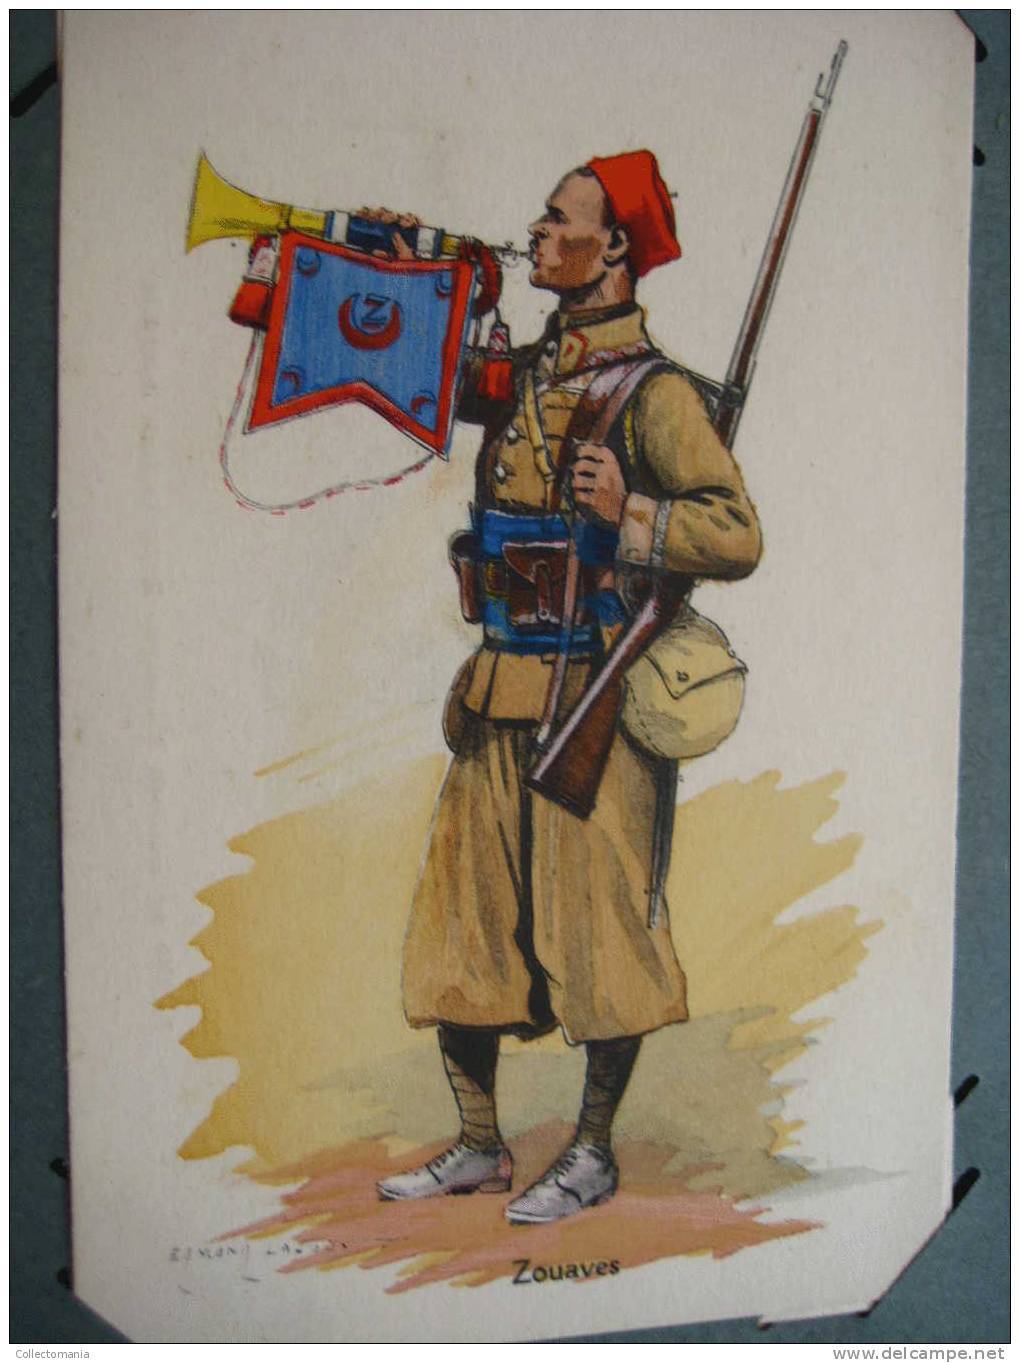 Military uniforms - regiments ,499 postcards, Album SPLENDID, lithography hand coloured, around 1900 condition VG